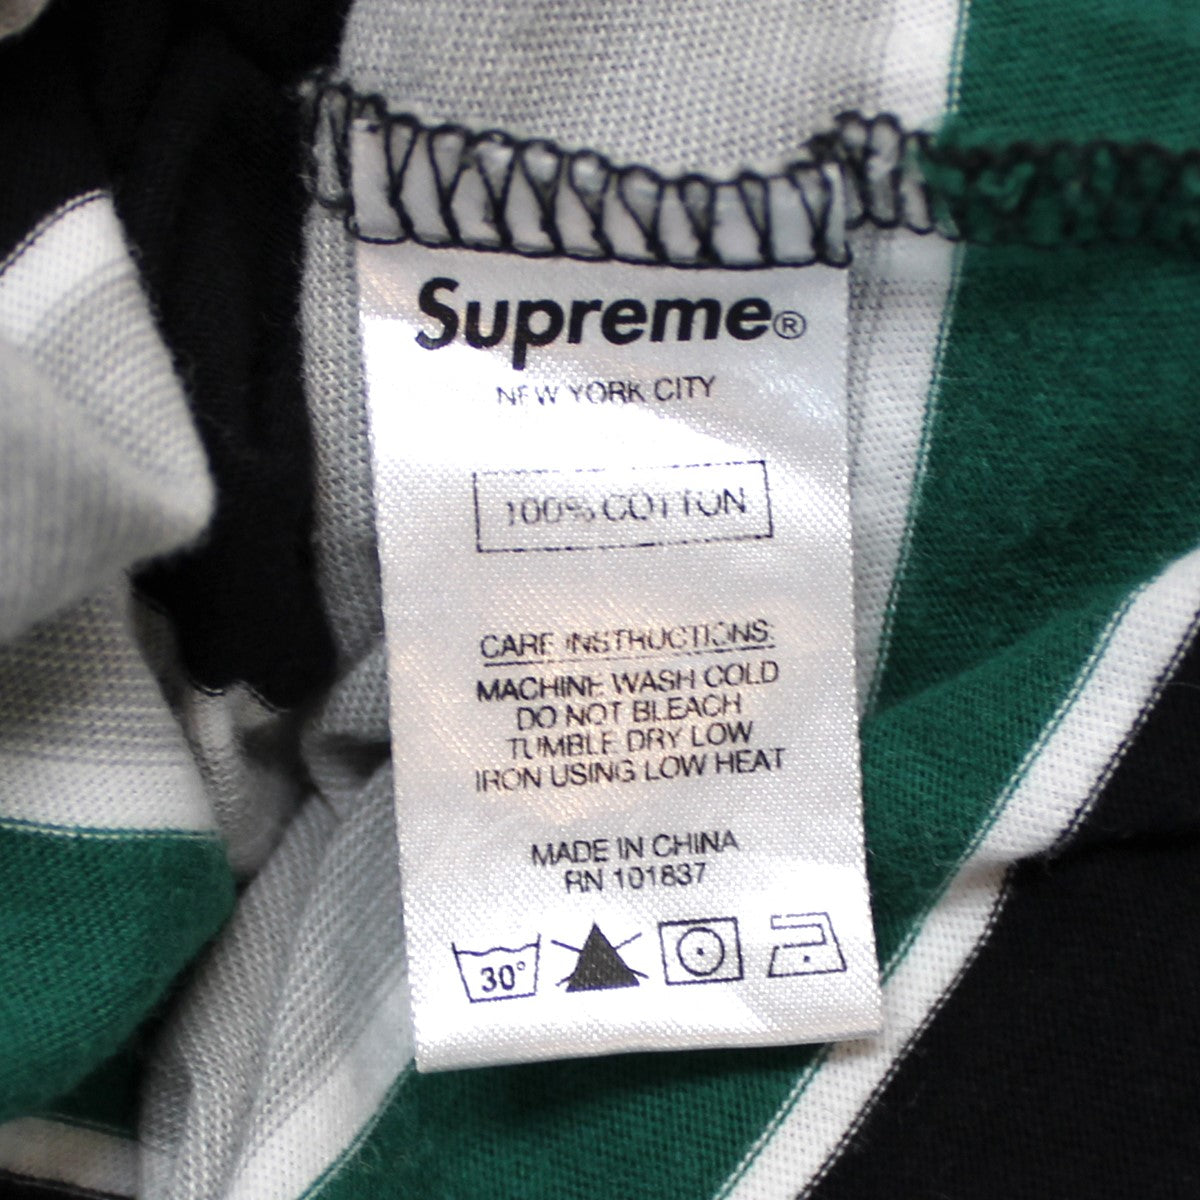 SUPREME(シュプリーム) 19SS Classic Logo Stripe Polo クラシック ロゴ ポロシャツ ブラック×グレー×グリーン  サイズ 14｜【公式】カインドオルオンライン ブランド古着・中古通販【kindal】